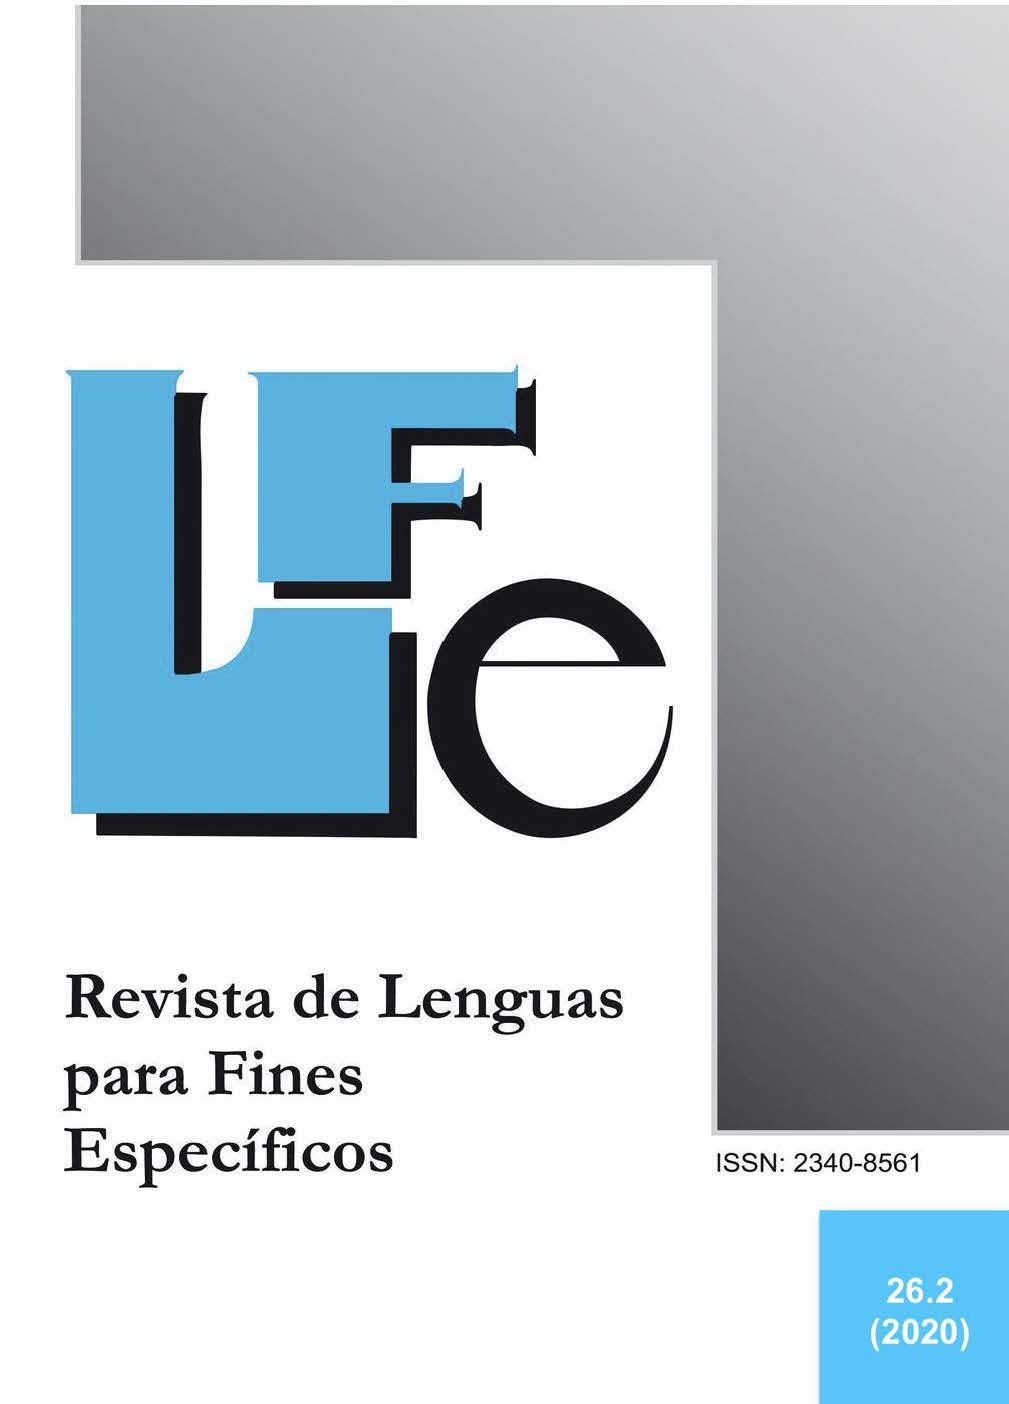 					View Vol. 26 No. 2 (2020): Revista de Lenguas para Fines Específicos
				